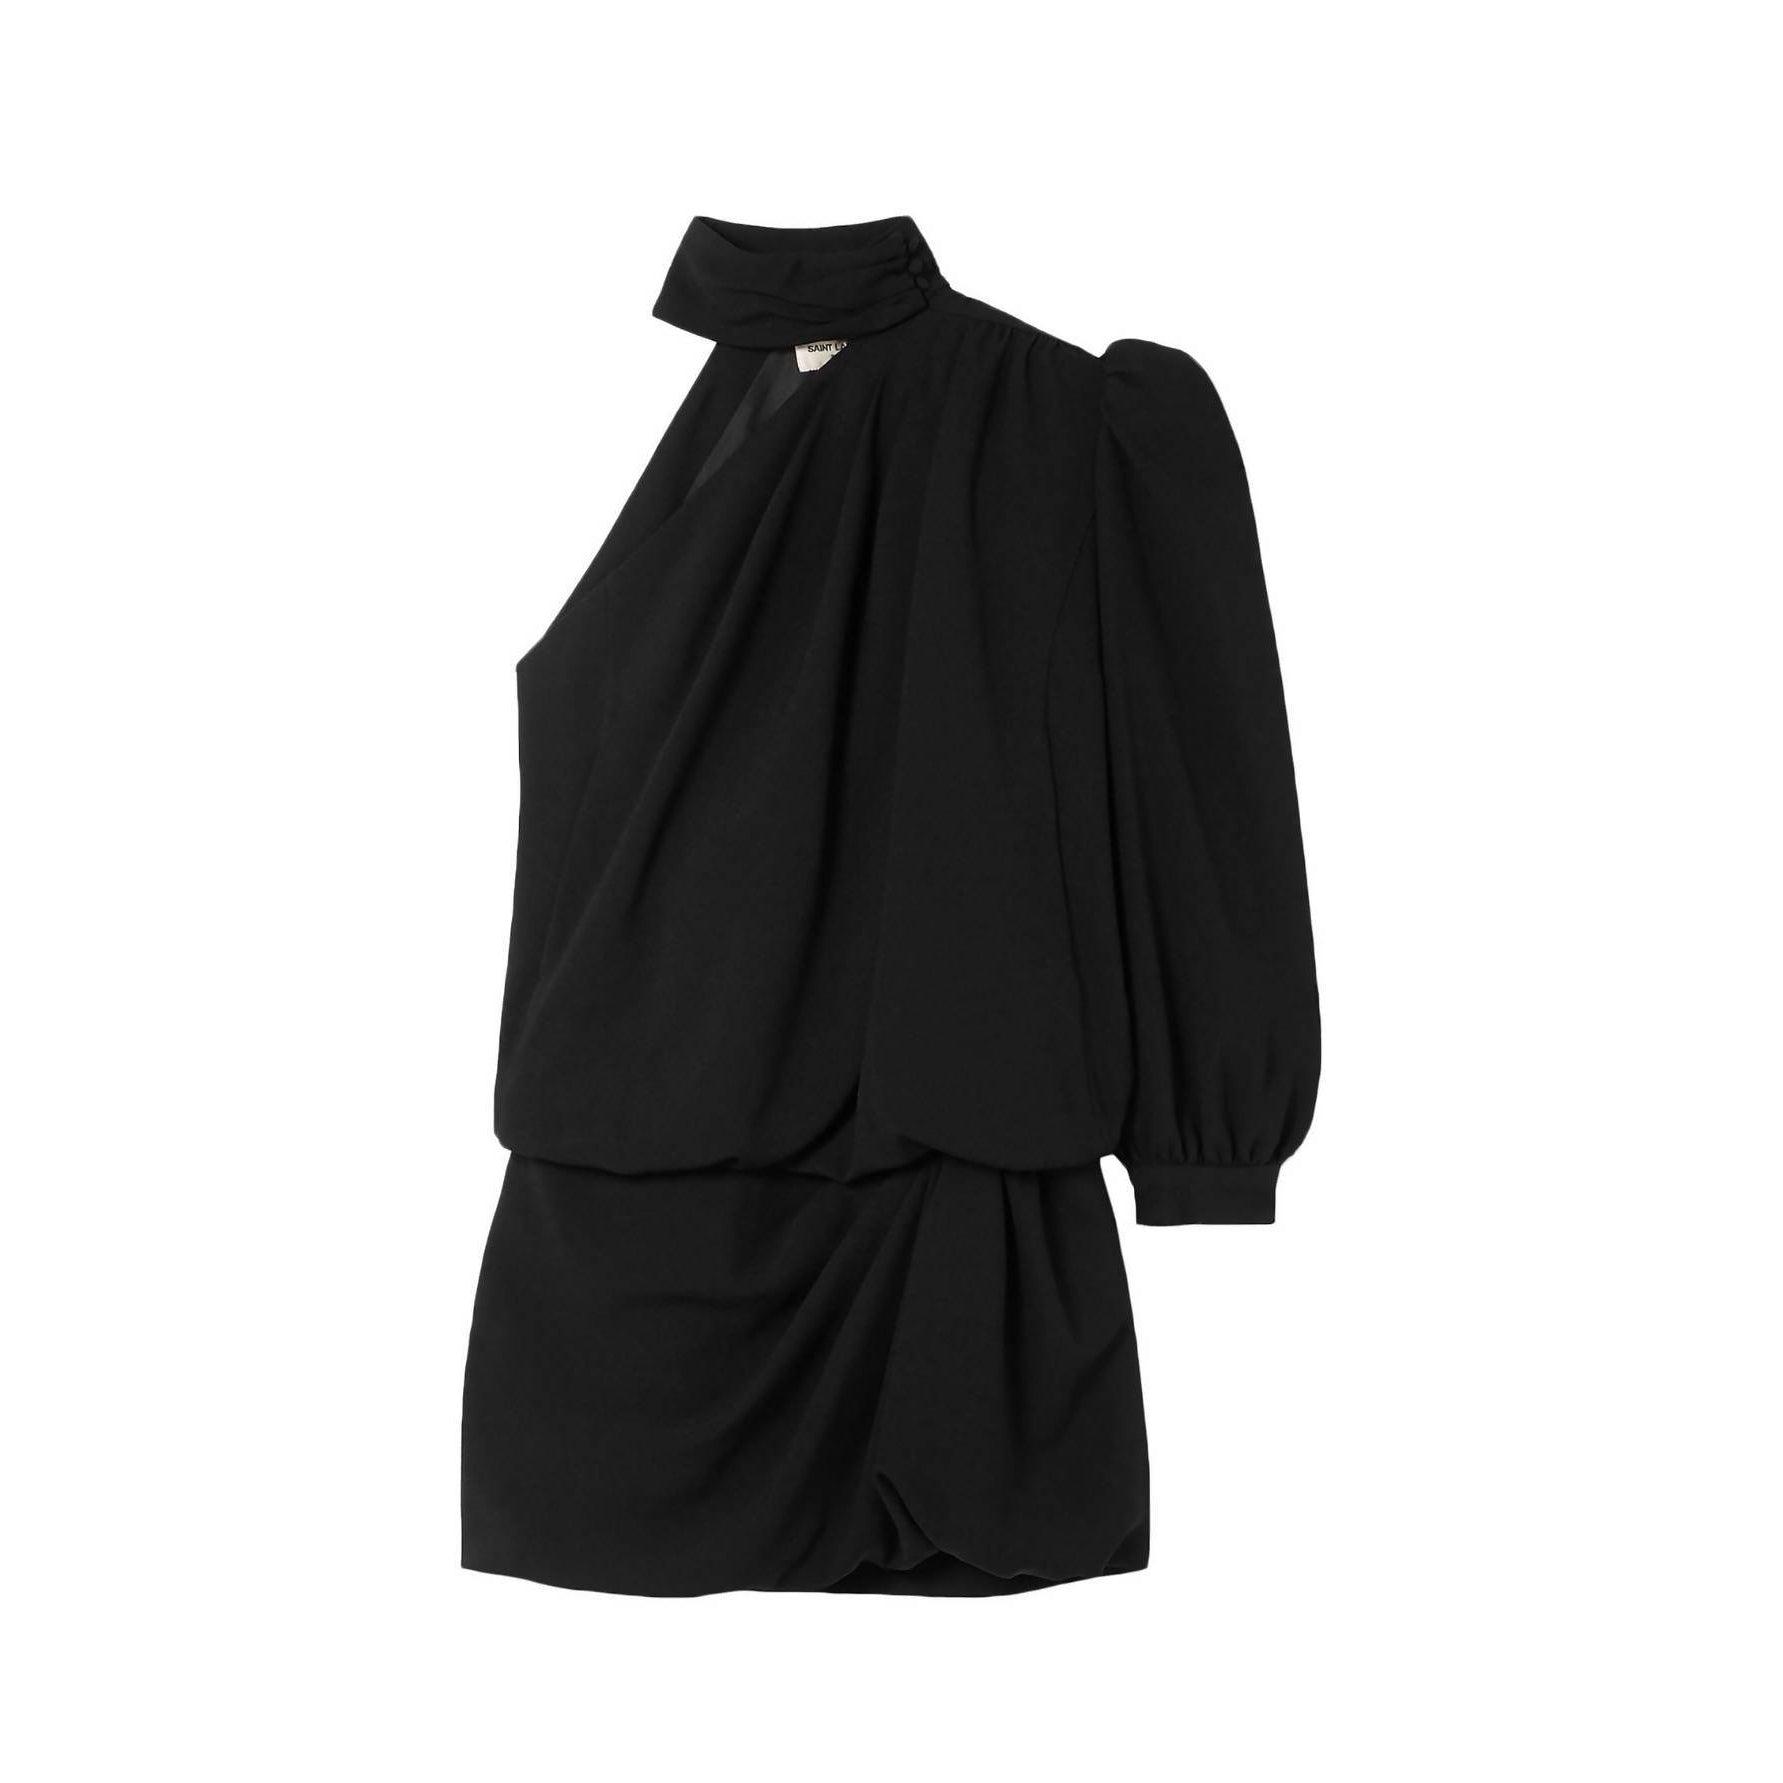 sheer bra Saint Laurent - Black Semi - Saint Laurent embellished neck tie  short dress - GenesinlifeShops Bhutan